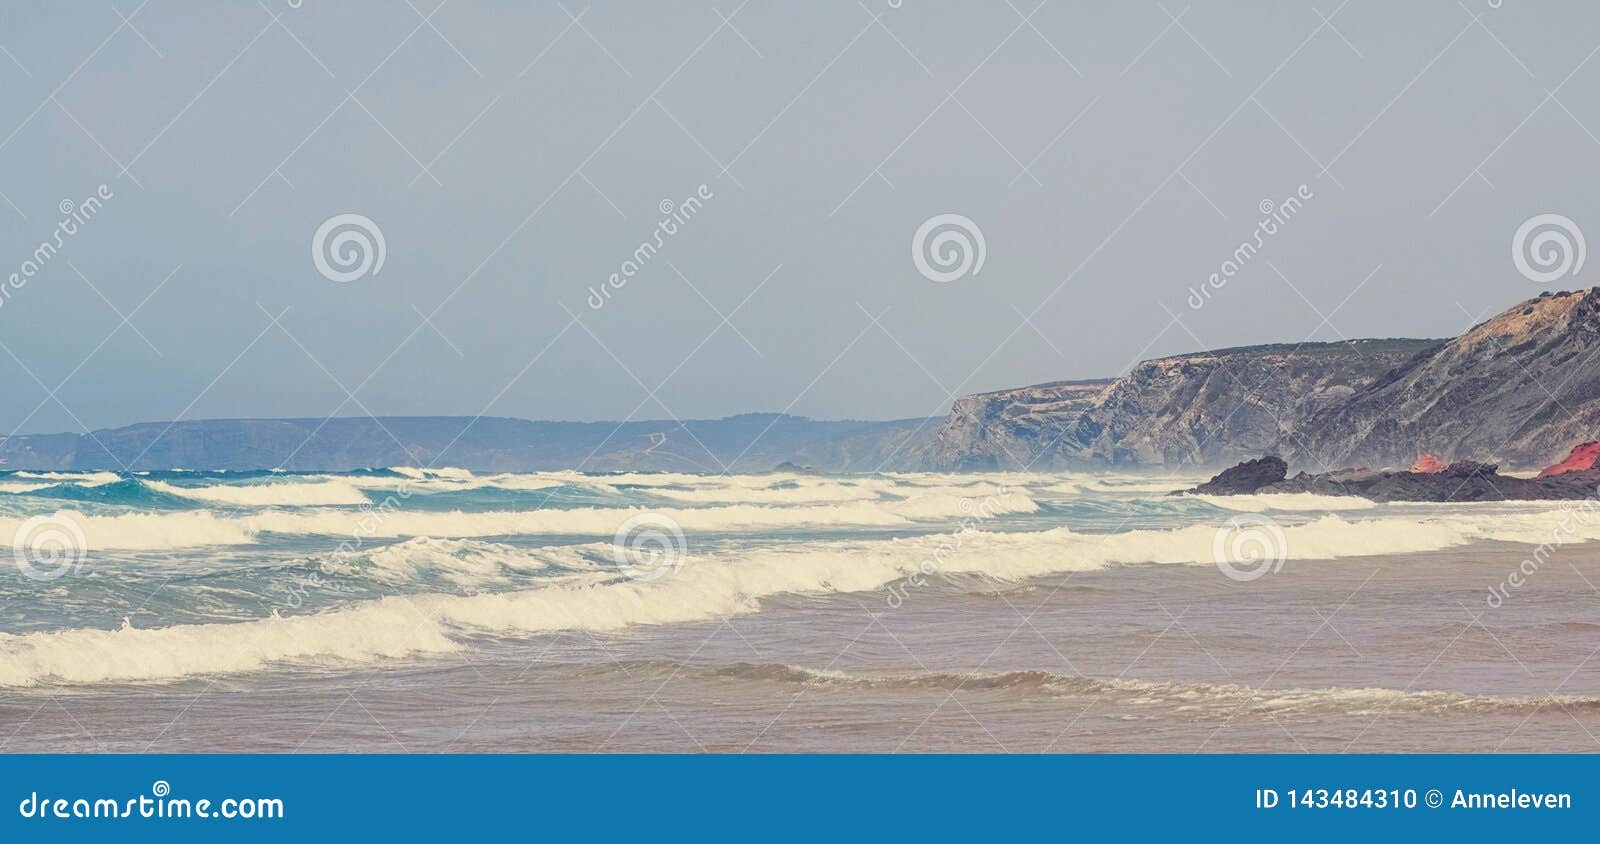 Atlantic Ocean Coast in Europe Stock Photo - Image of summertime, beach: 143484310